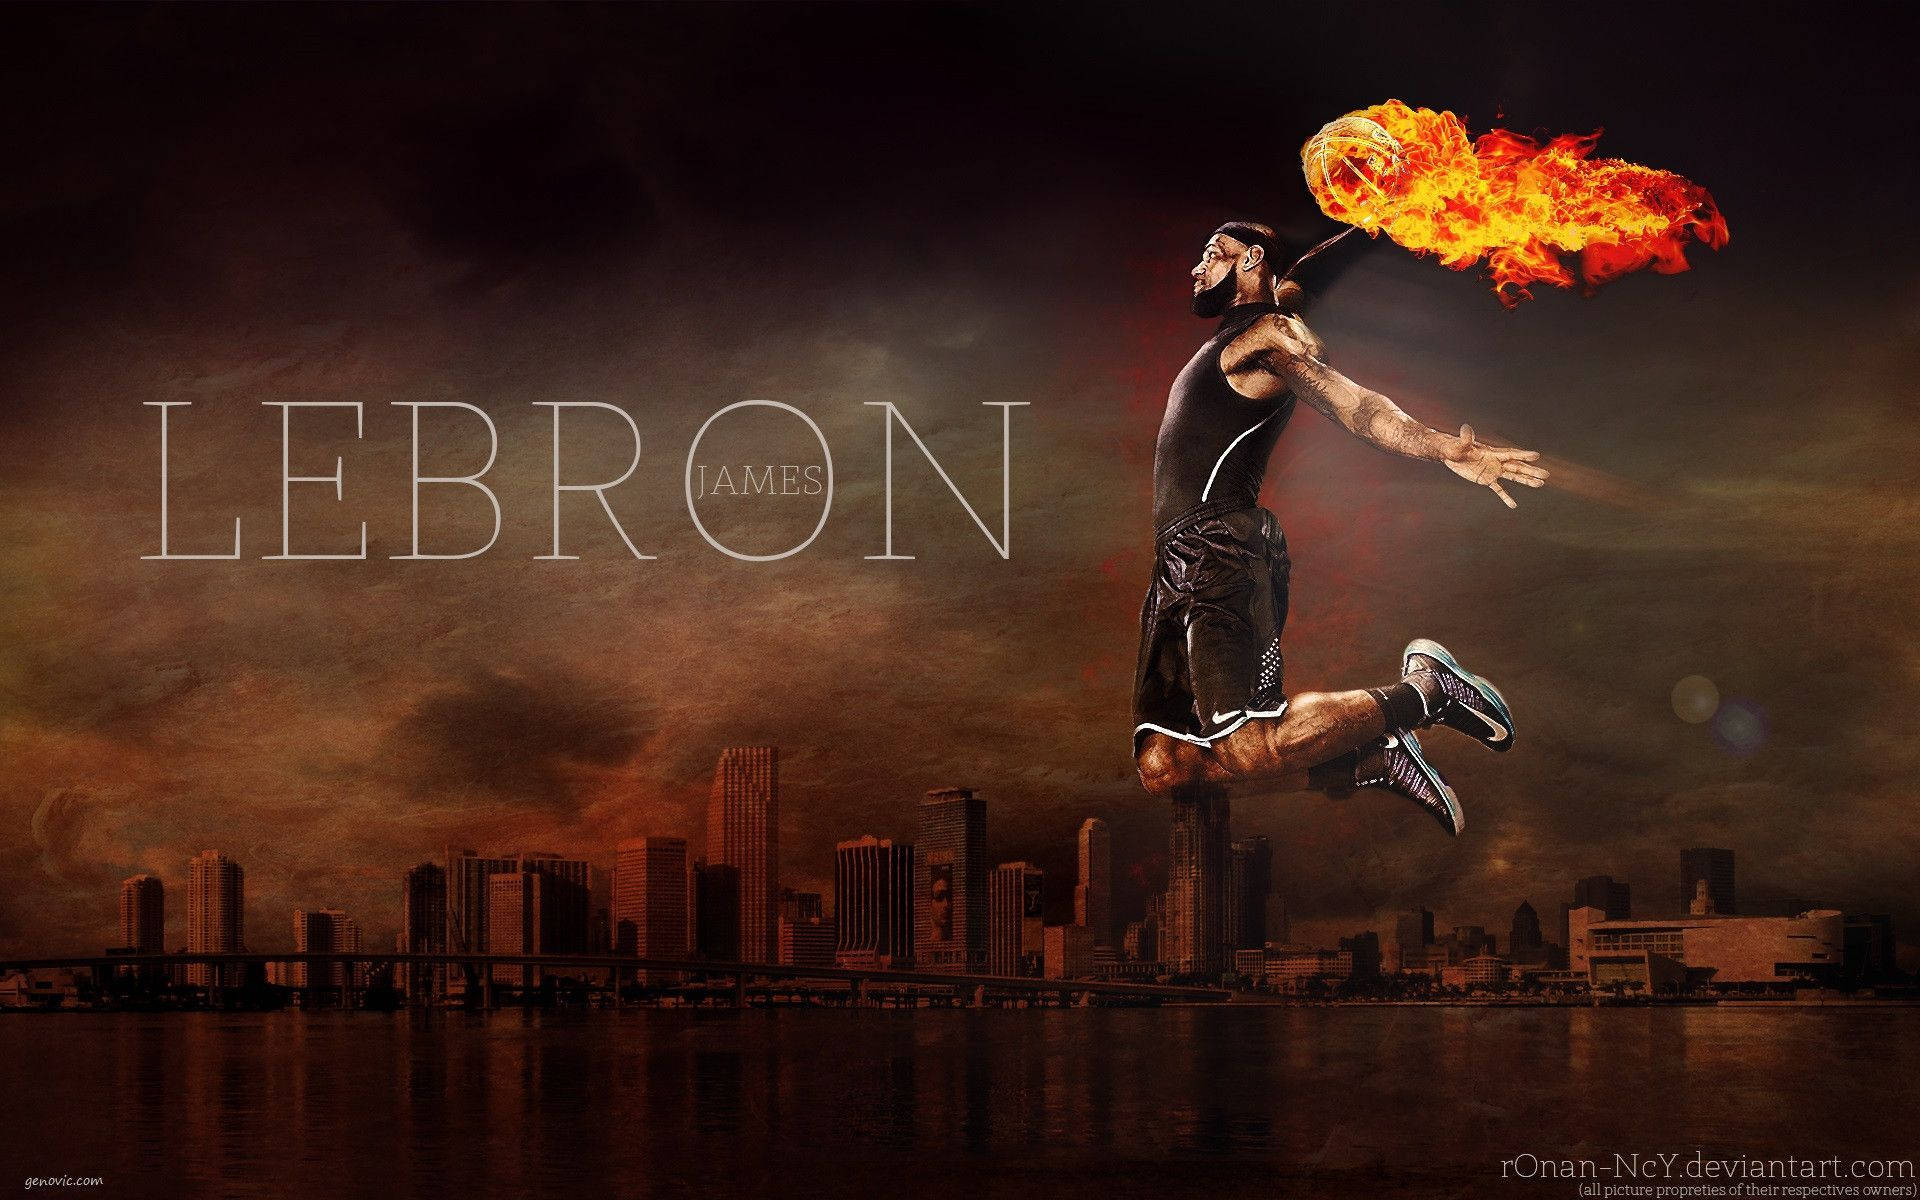 Lebron James Basketball Slam Dunk Ball On Fire Background